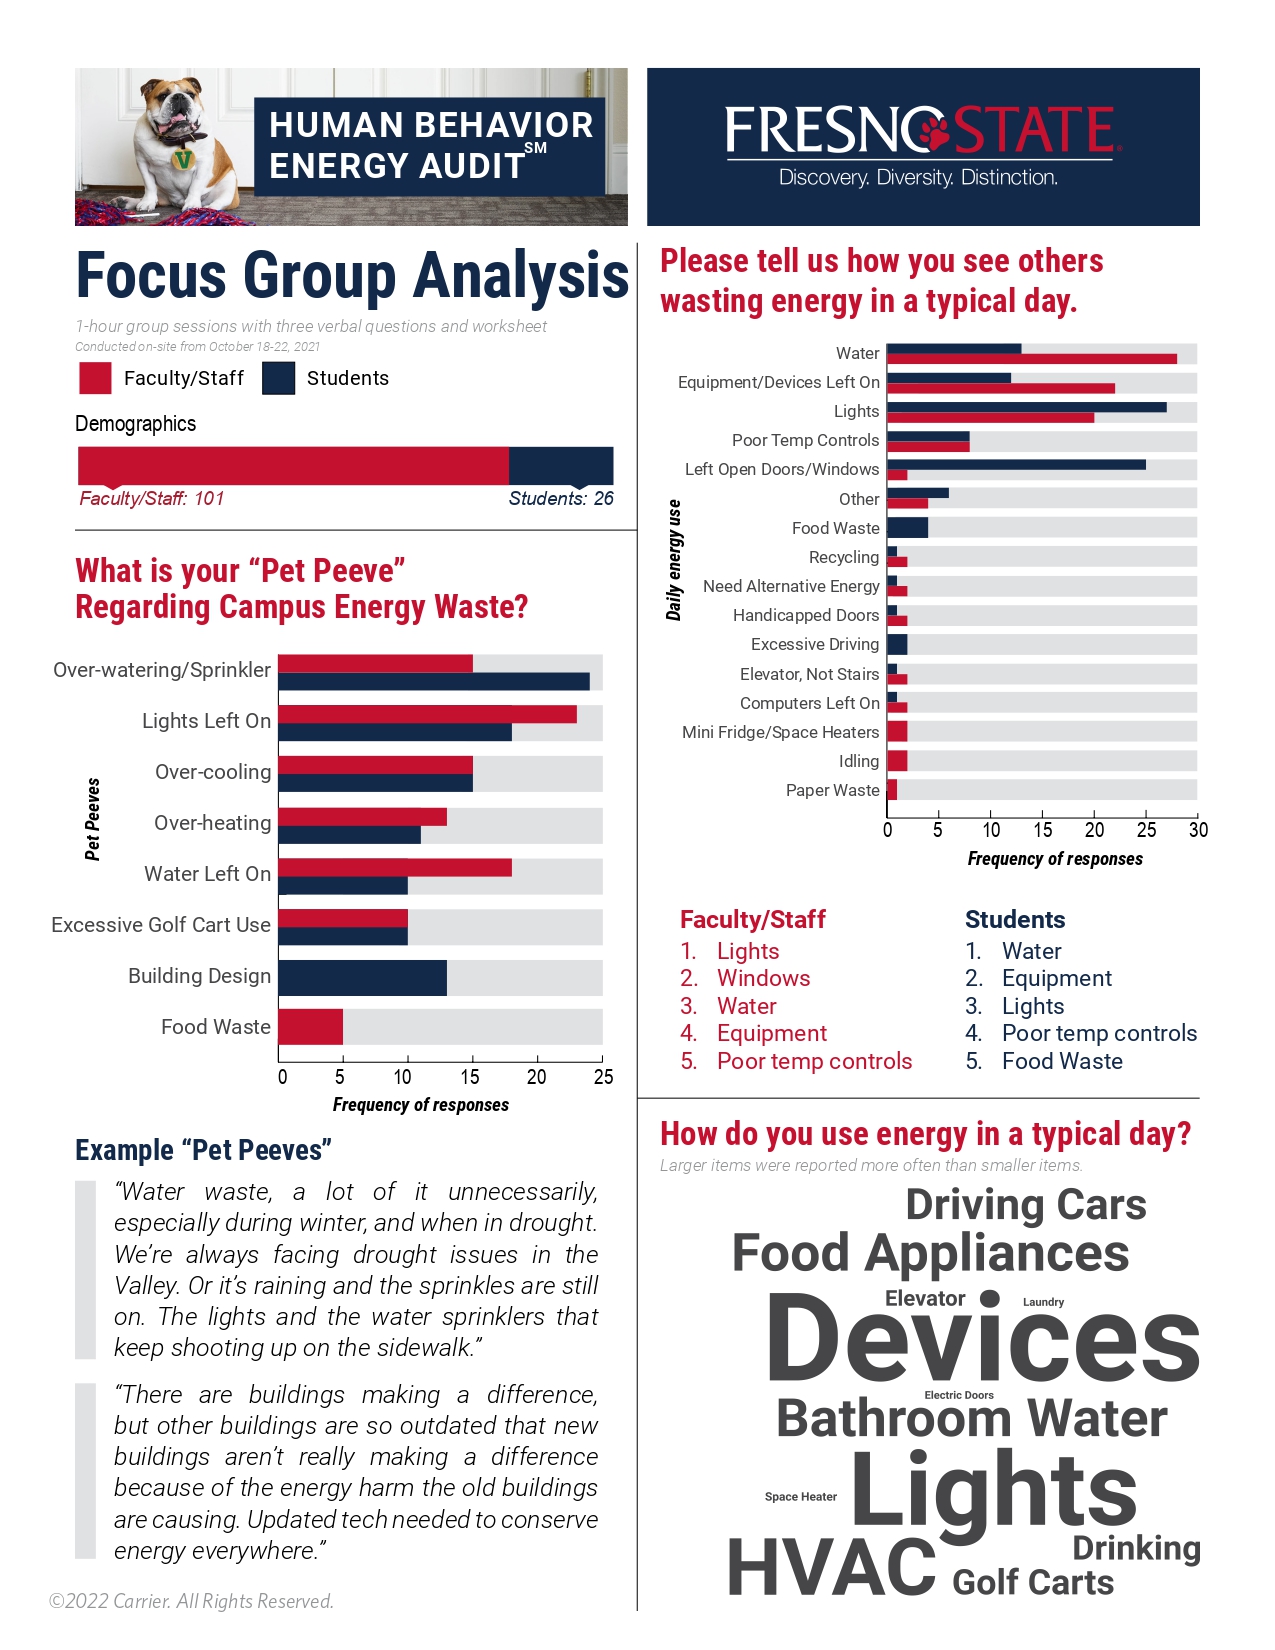 Focus Group analysis